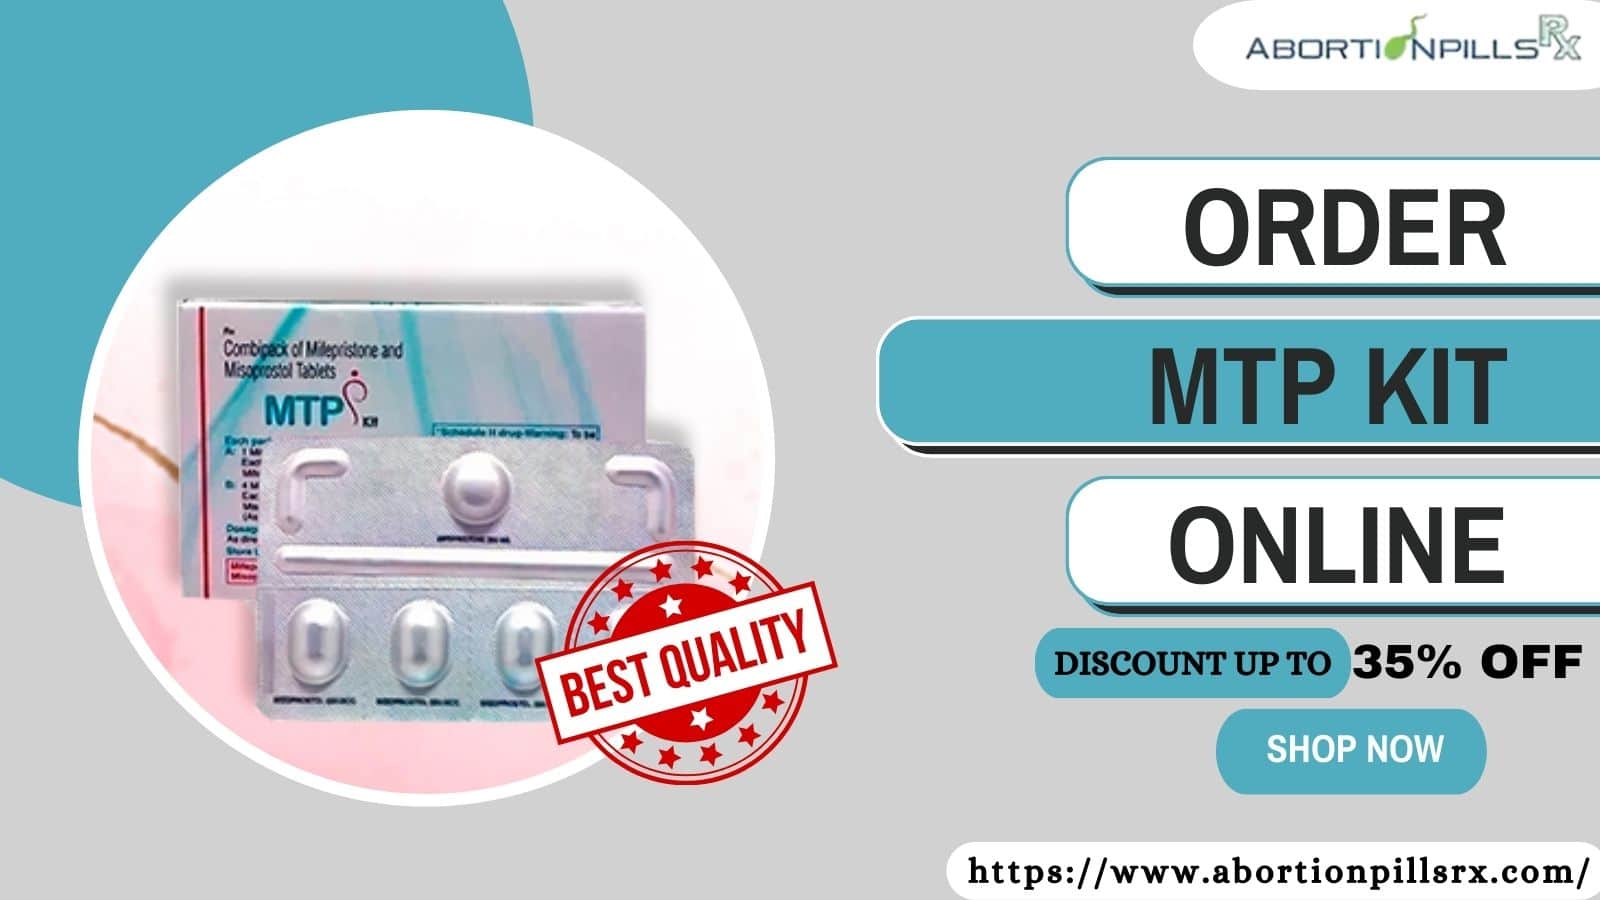 Exclusive Offer - Order MTP KIT Online - Get 35% Off Discount!